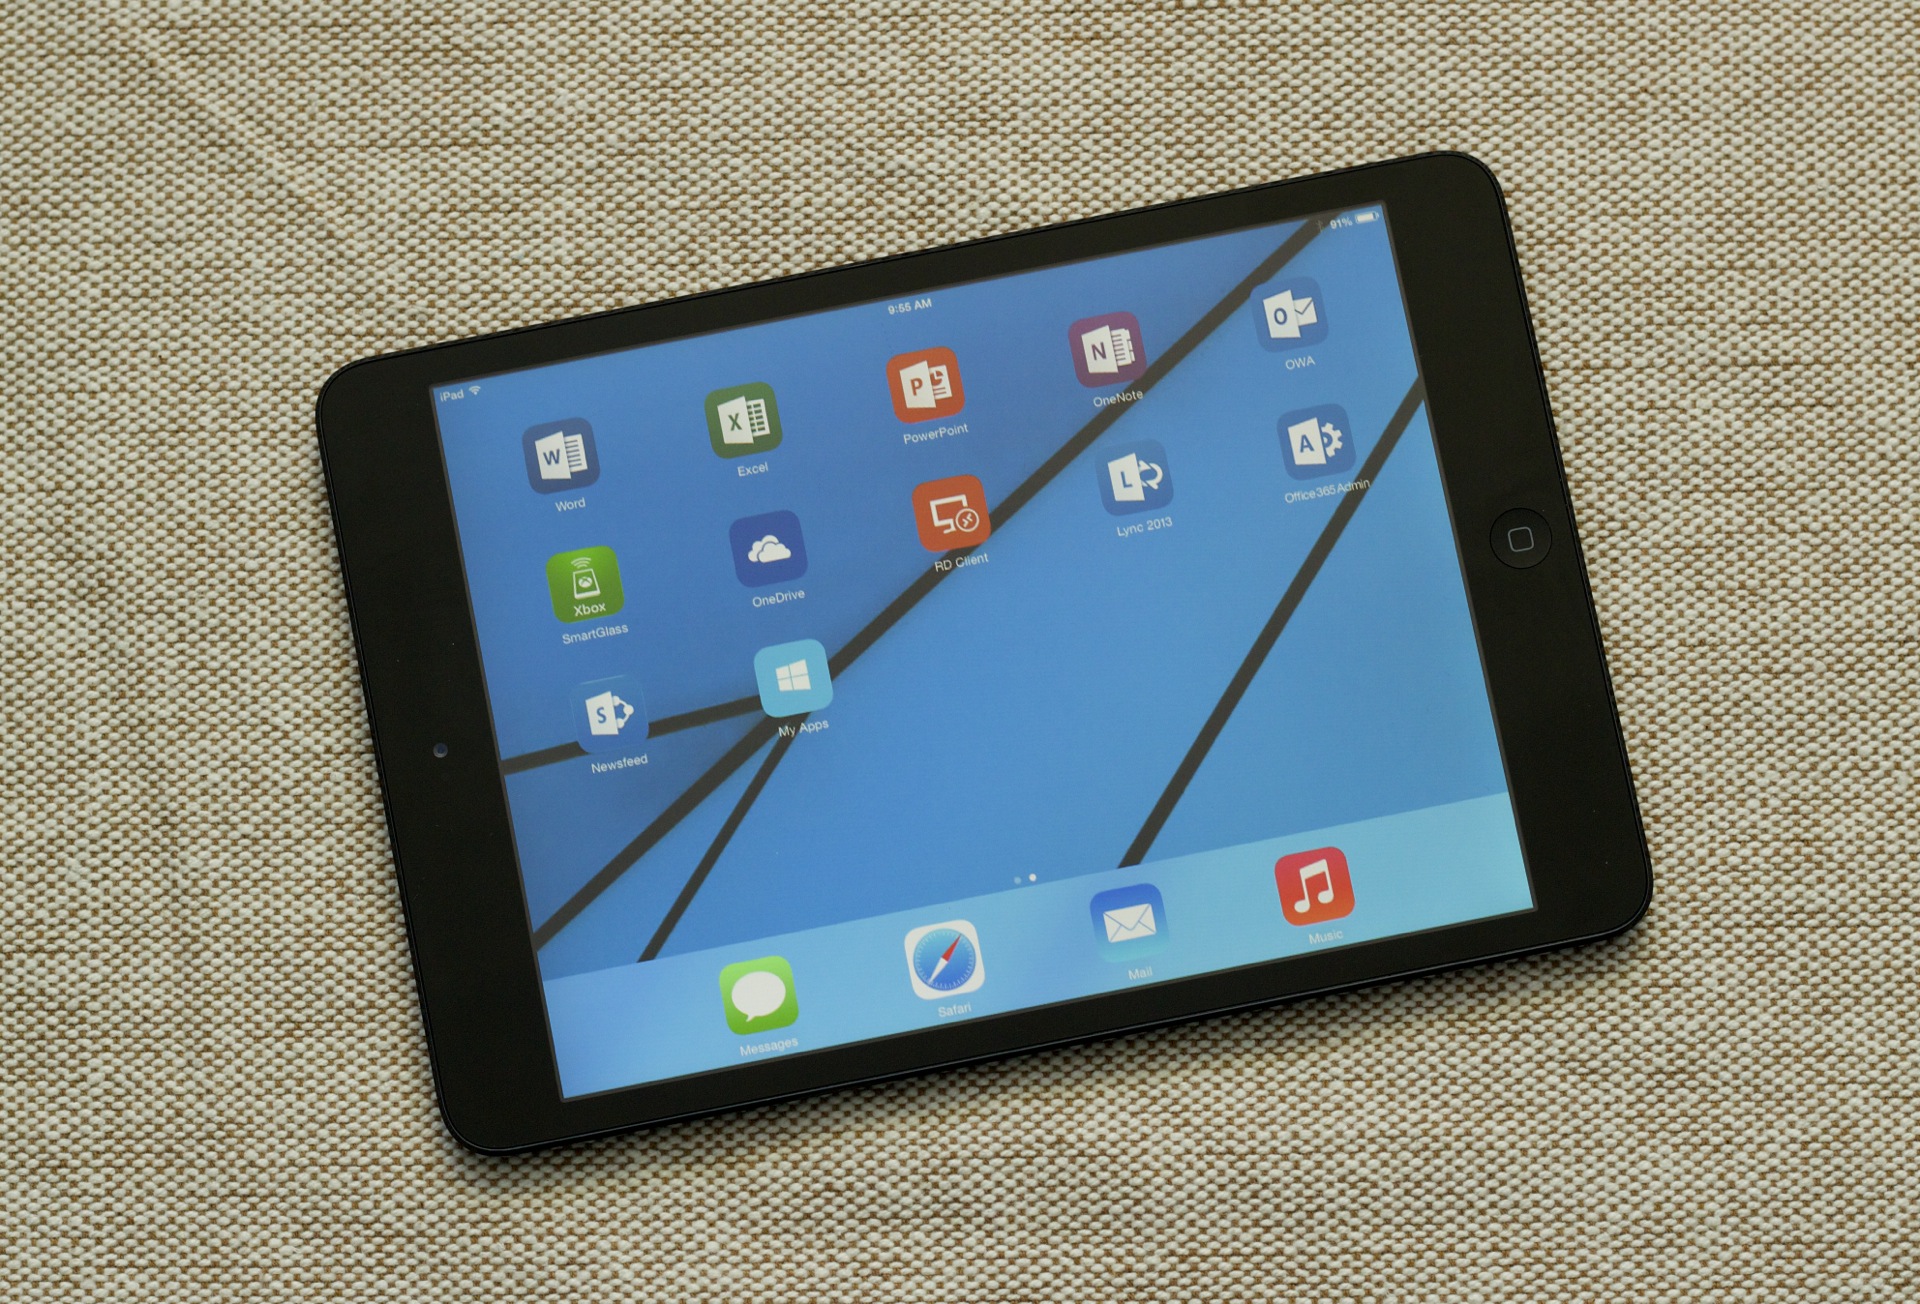 Microsoft already has a good small tablet—it’s called the iPad mini